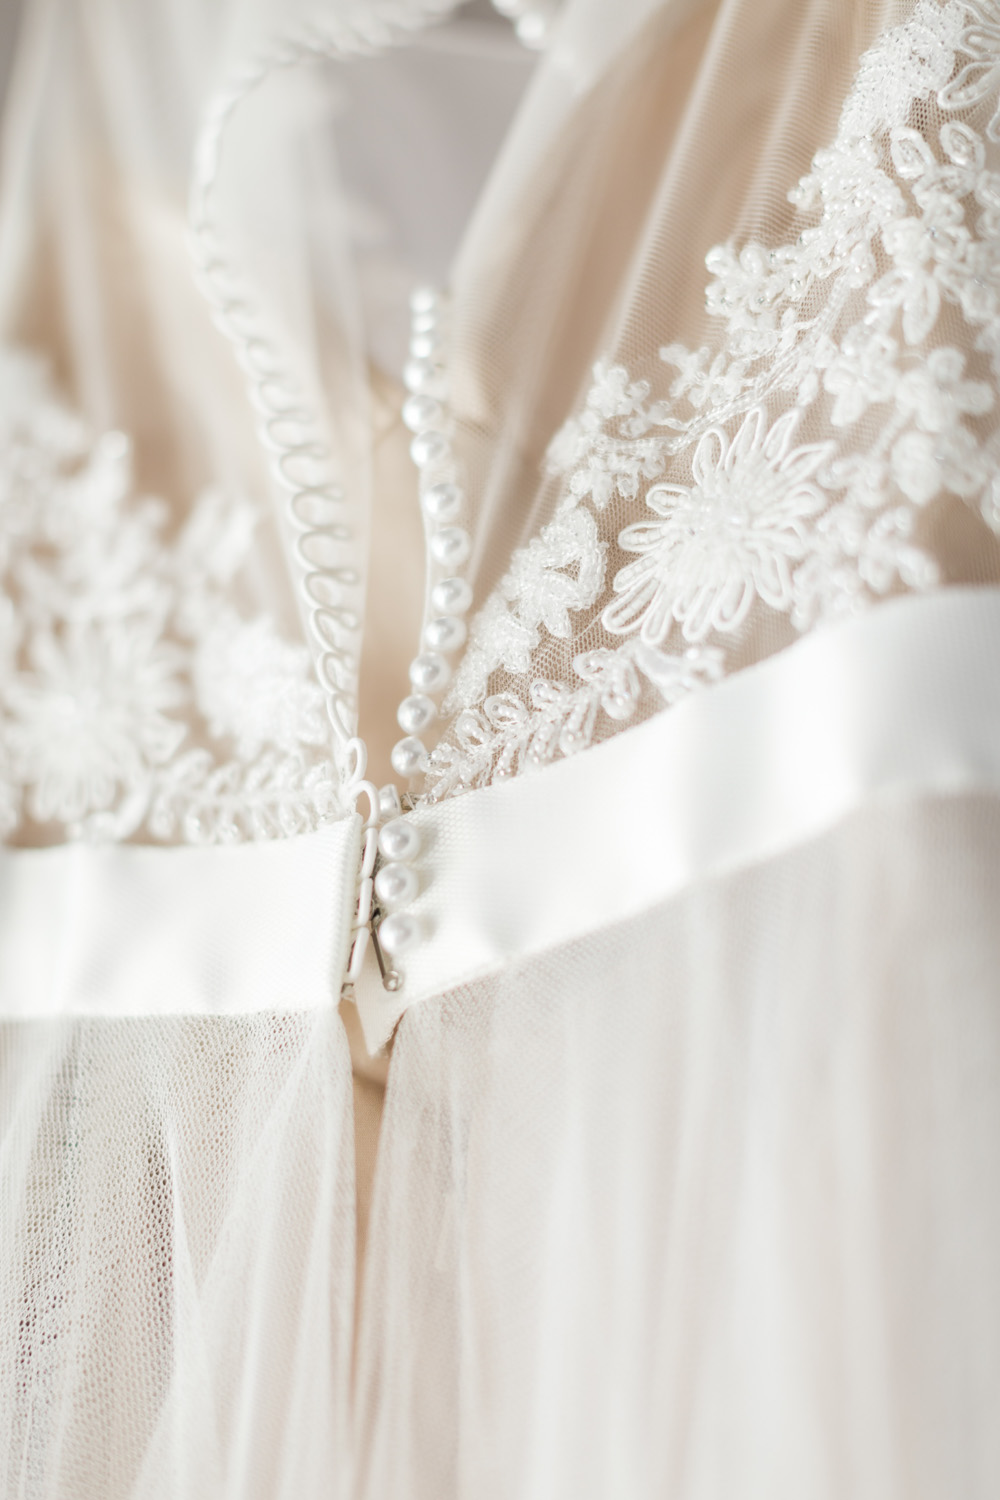 back of the brides dress